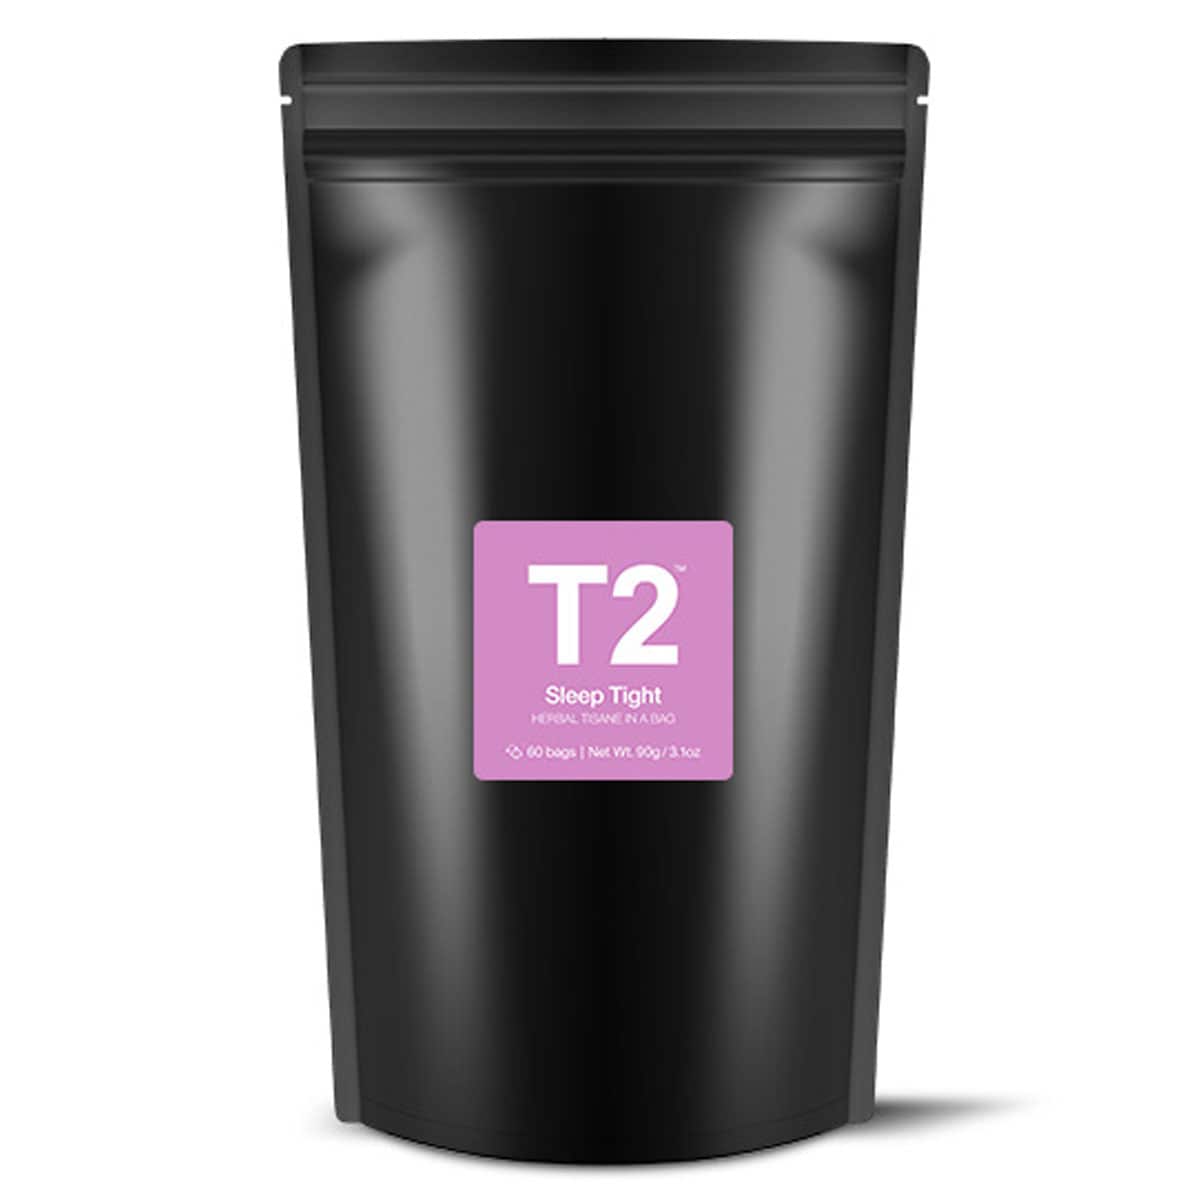 T2 Sleep Tight Teabags 60 Pack